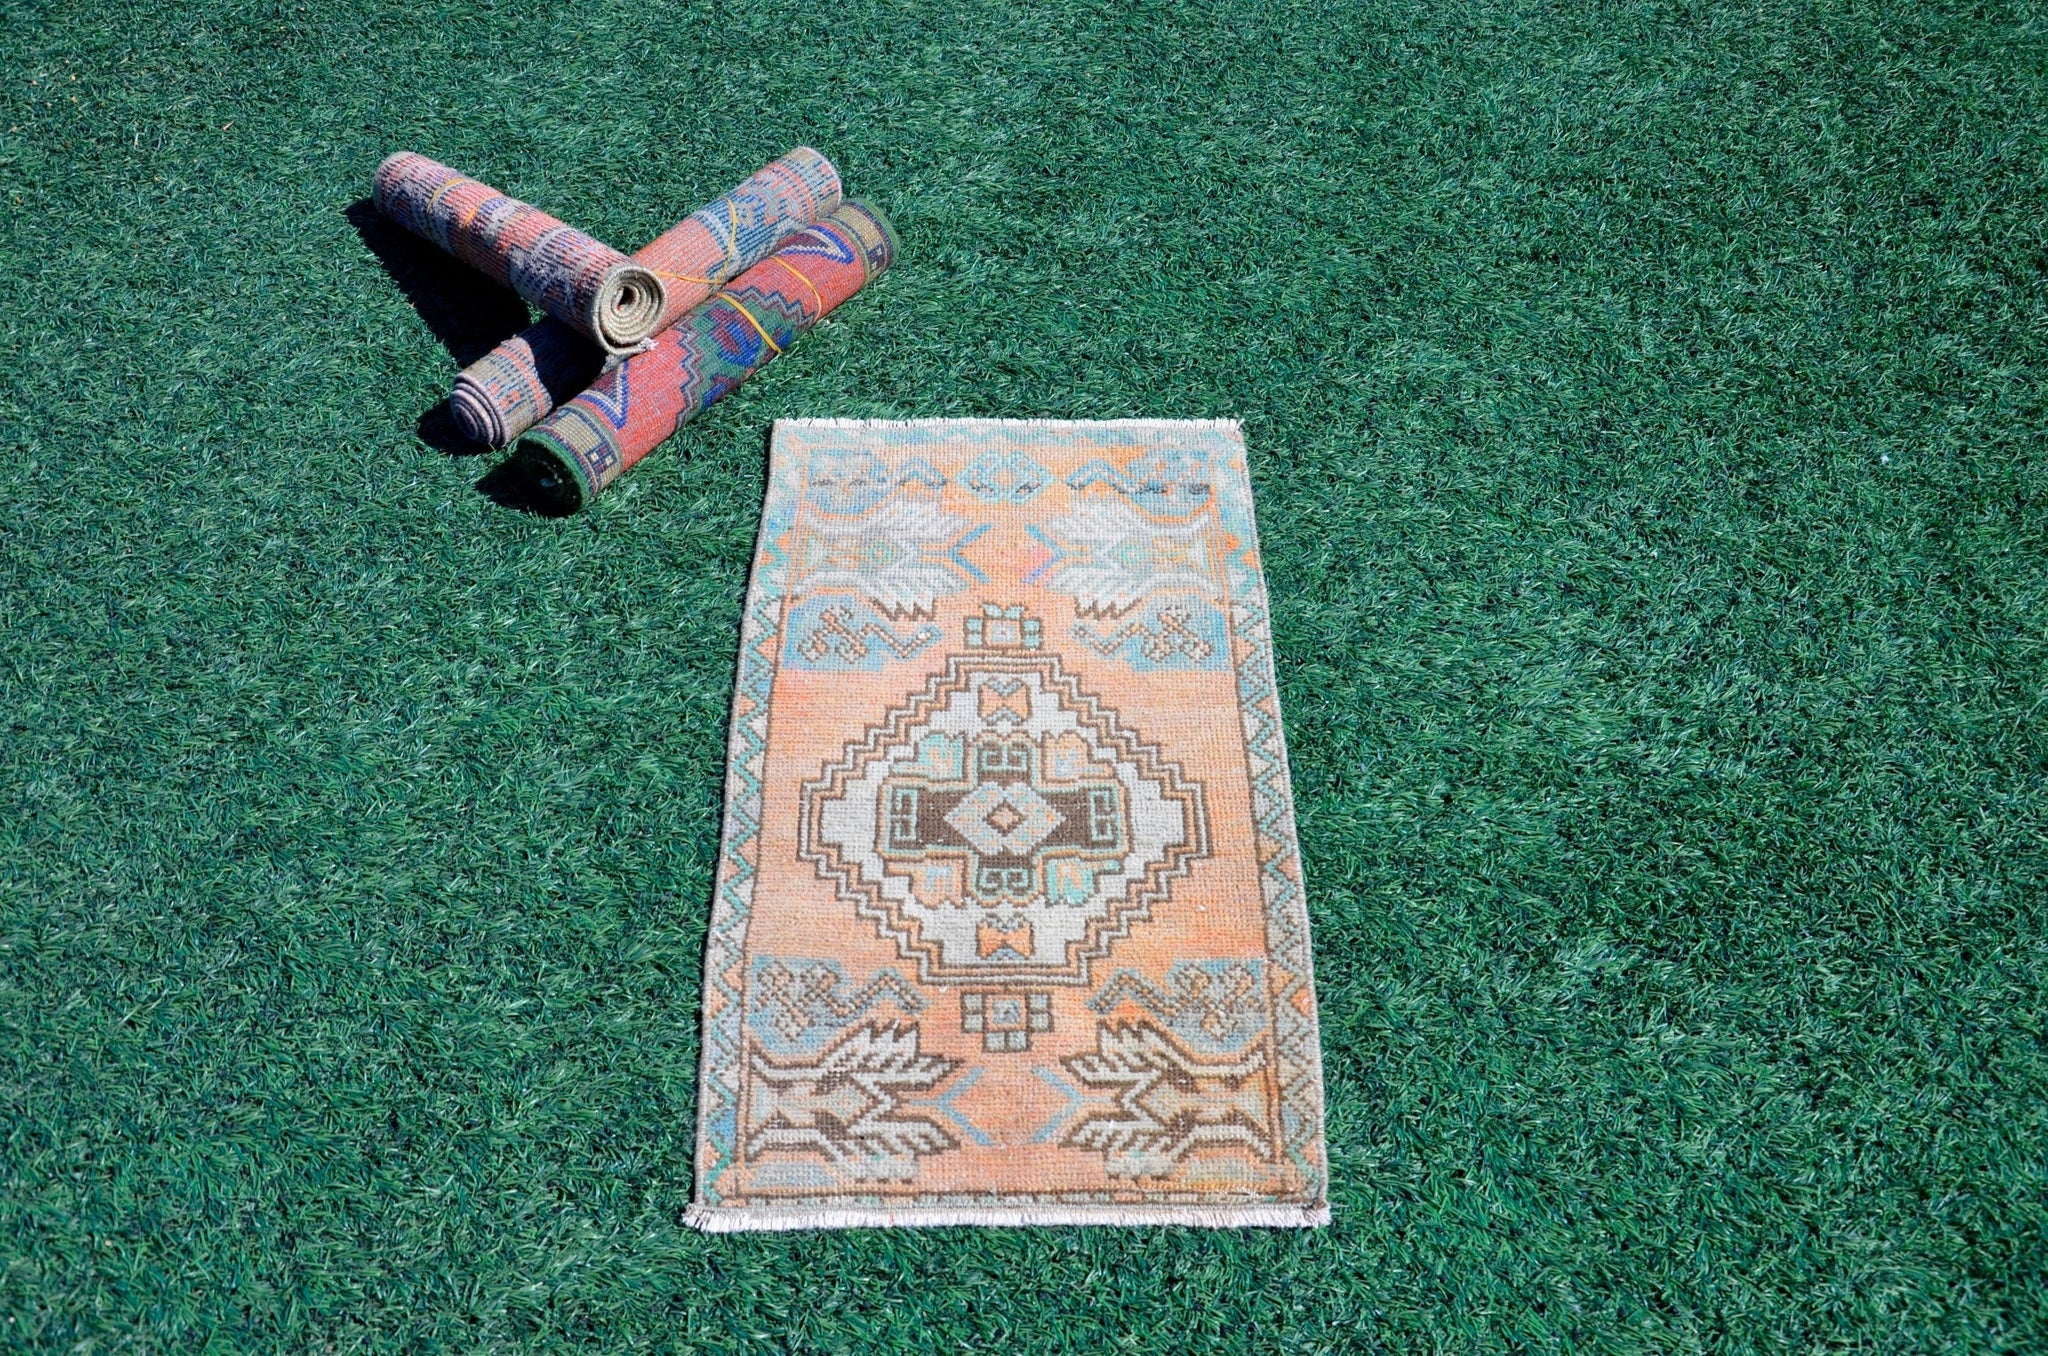 Vintage Handmade Turkish small area rug doormat for home decor, bathroom rug, area oushak rug bathroom mat kitchen kilim rug, rug 2.9x1.7, 665659